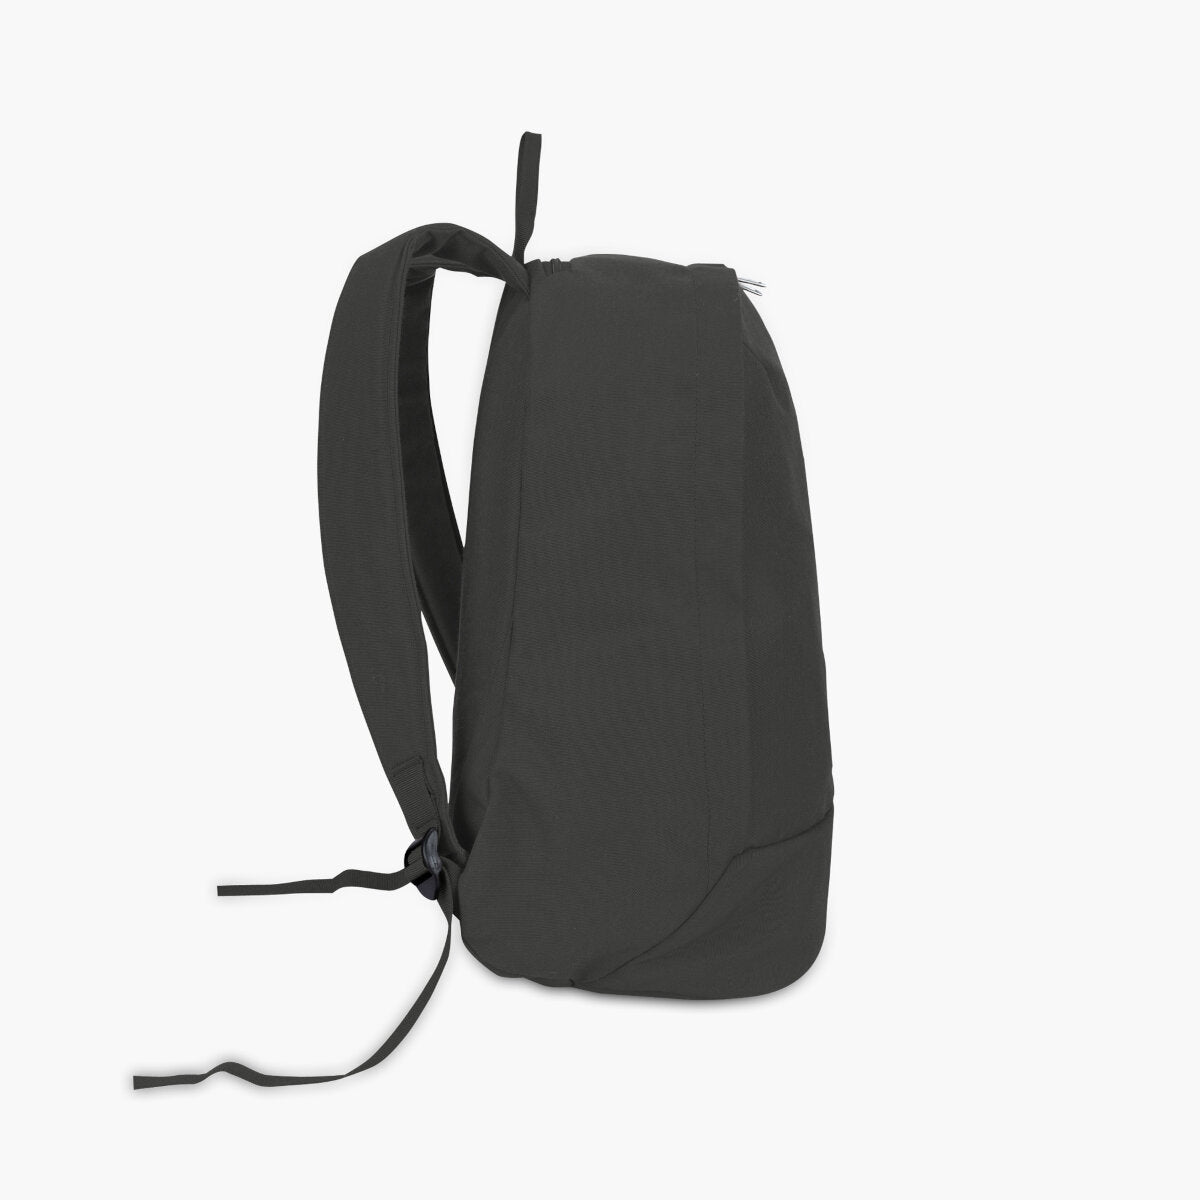 Green | Protecta Steady Progress Laptop Backpack - 5